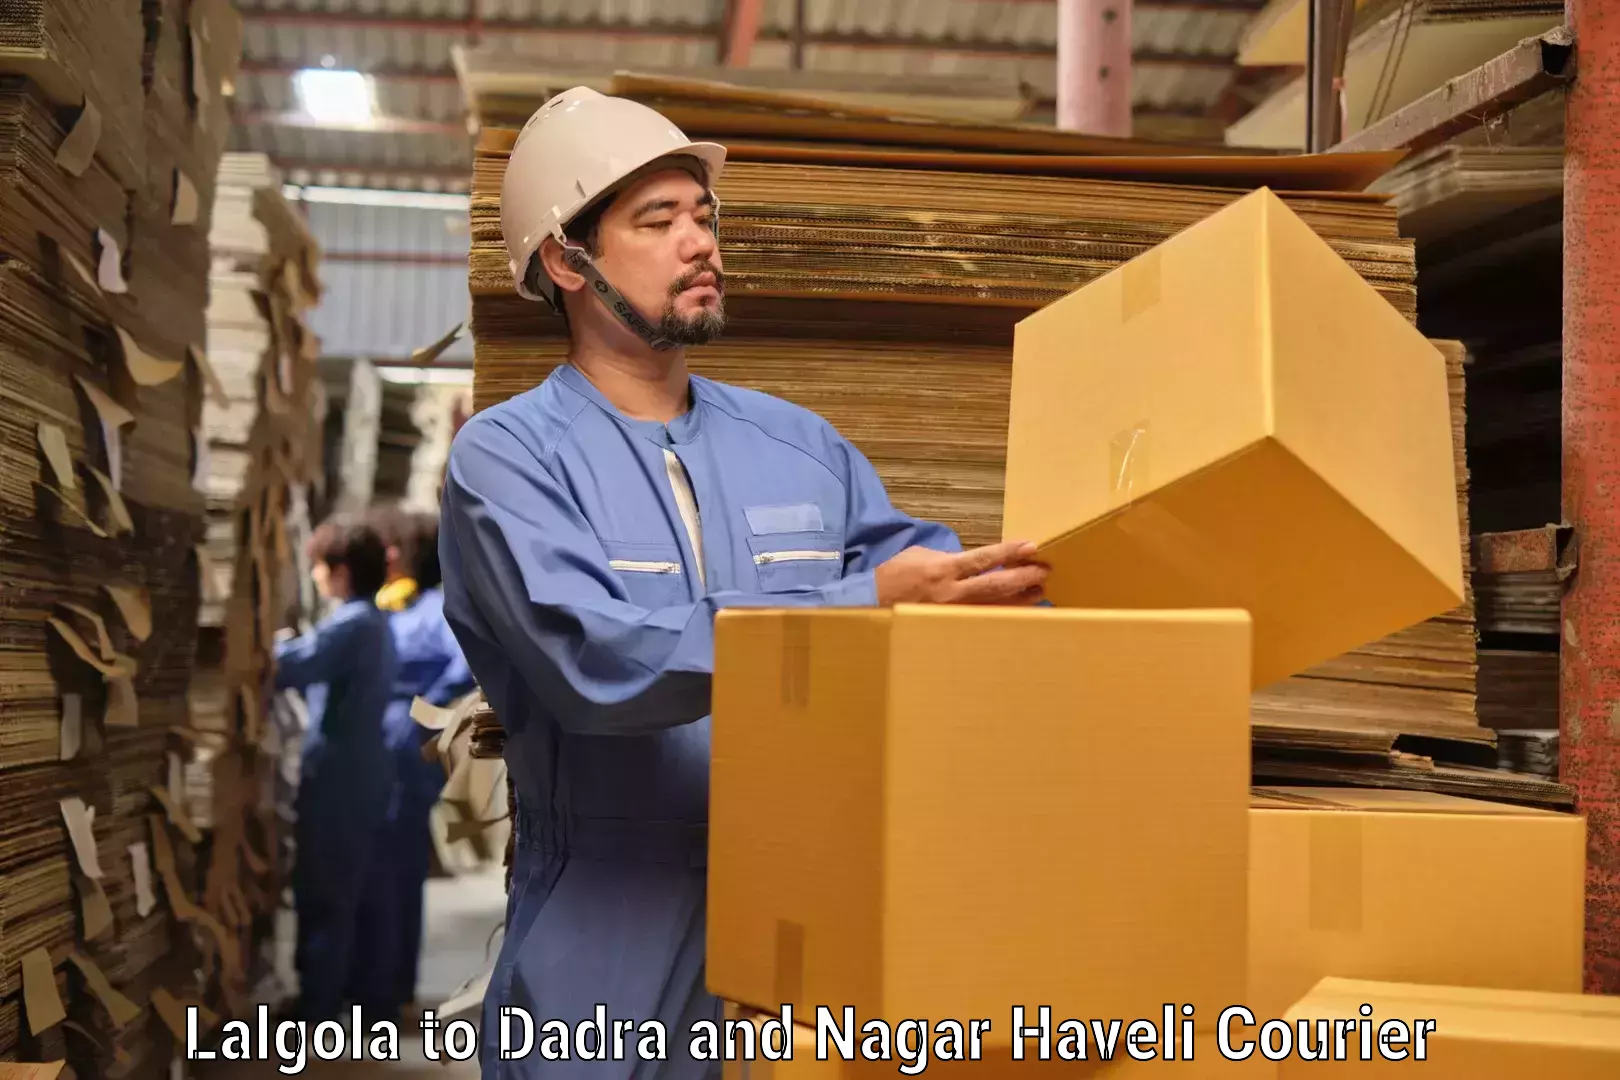 Reliable courier service Lalgola to Silvassa